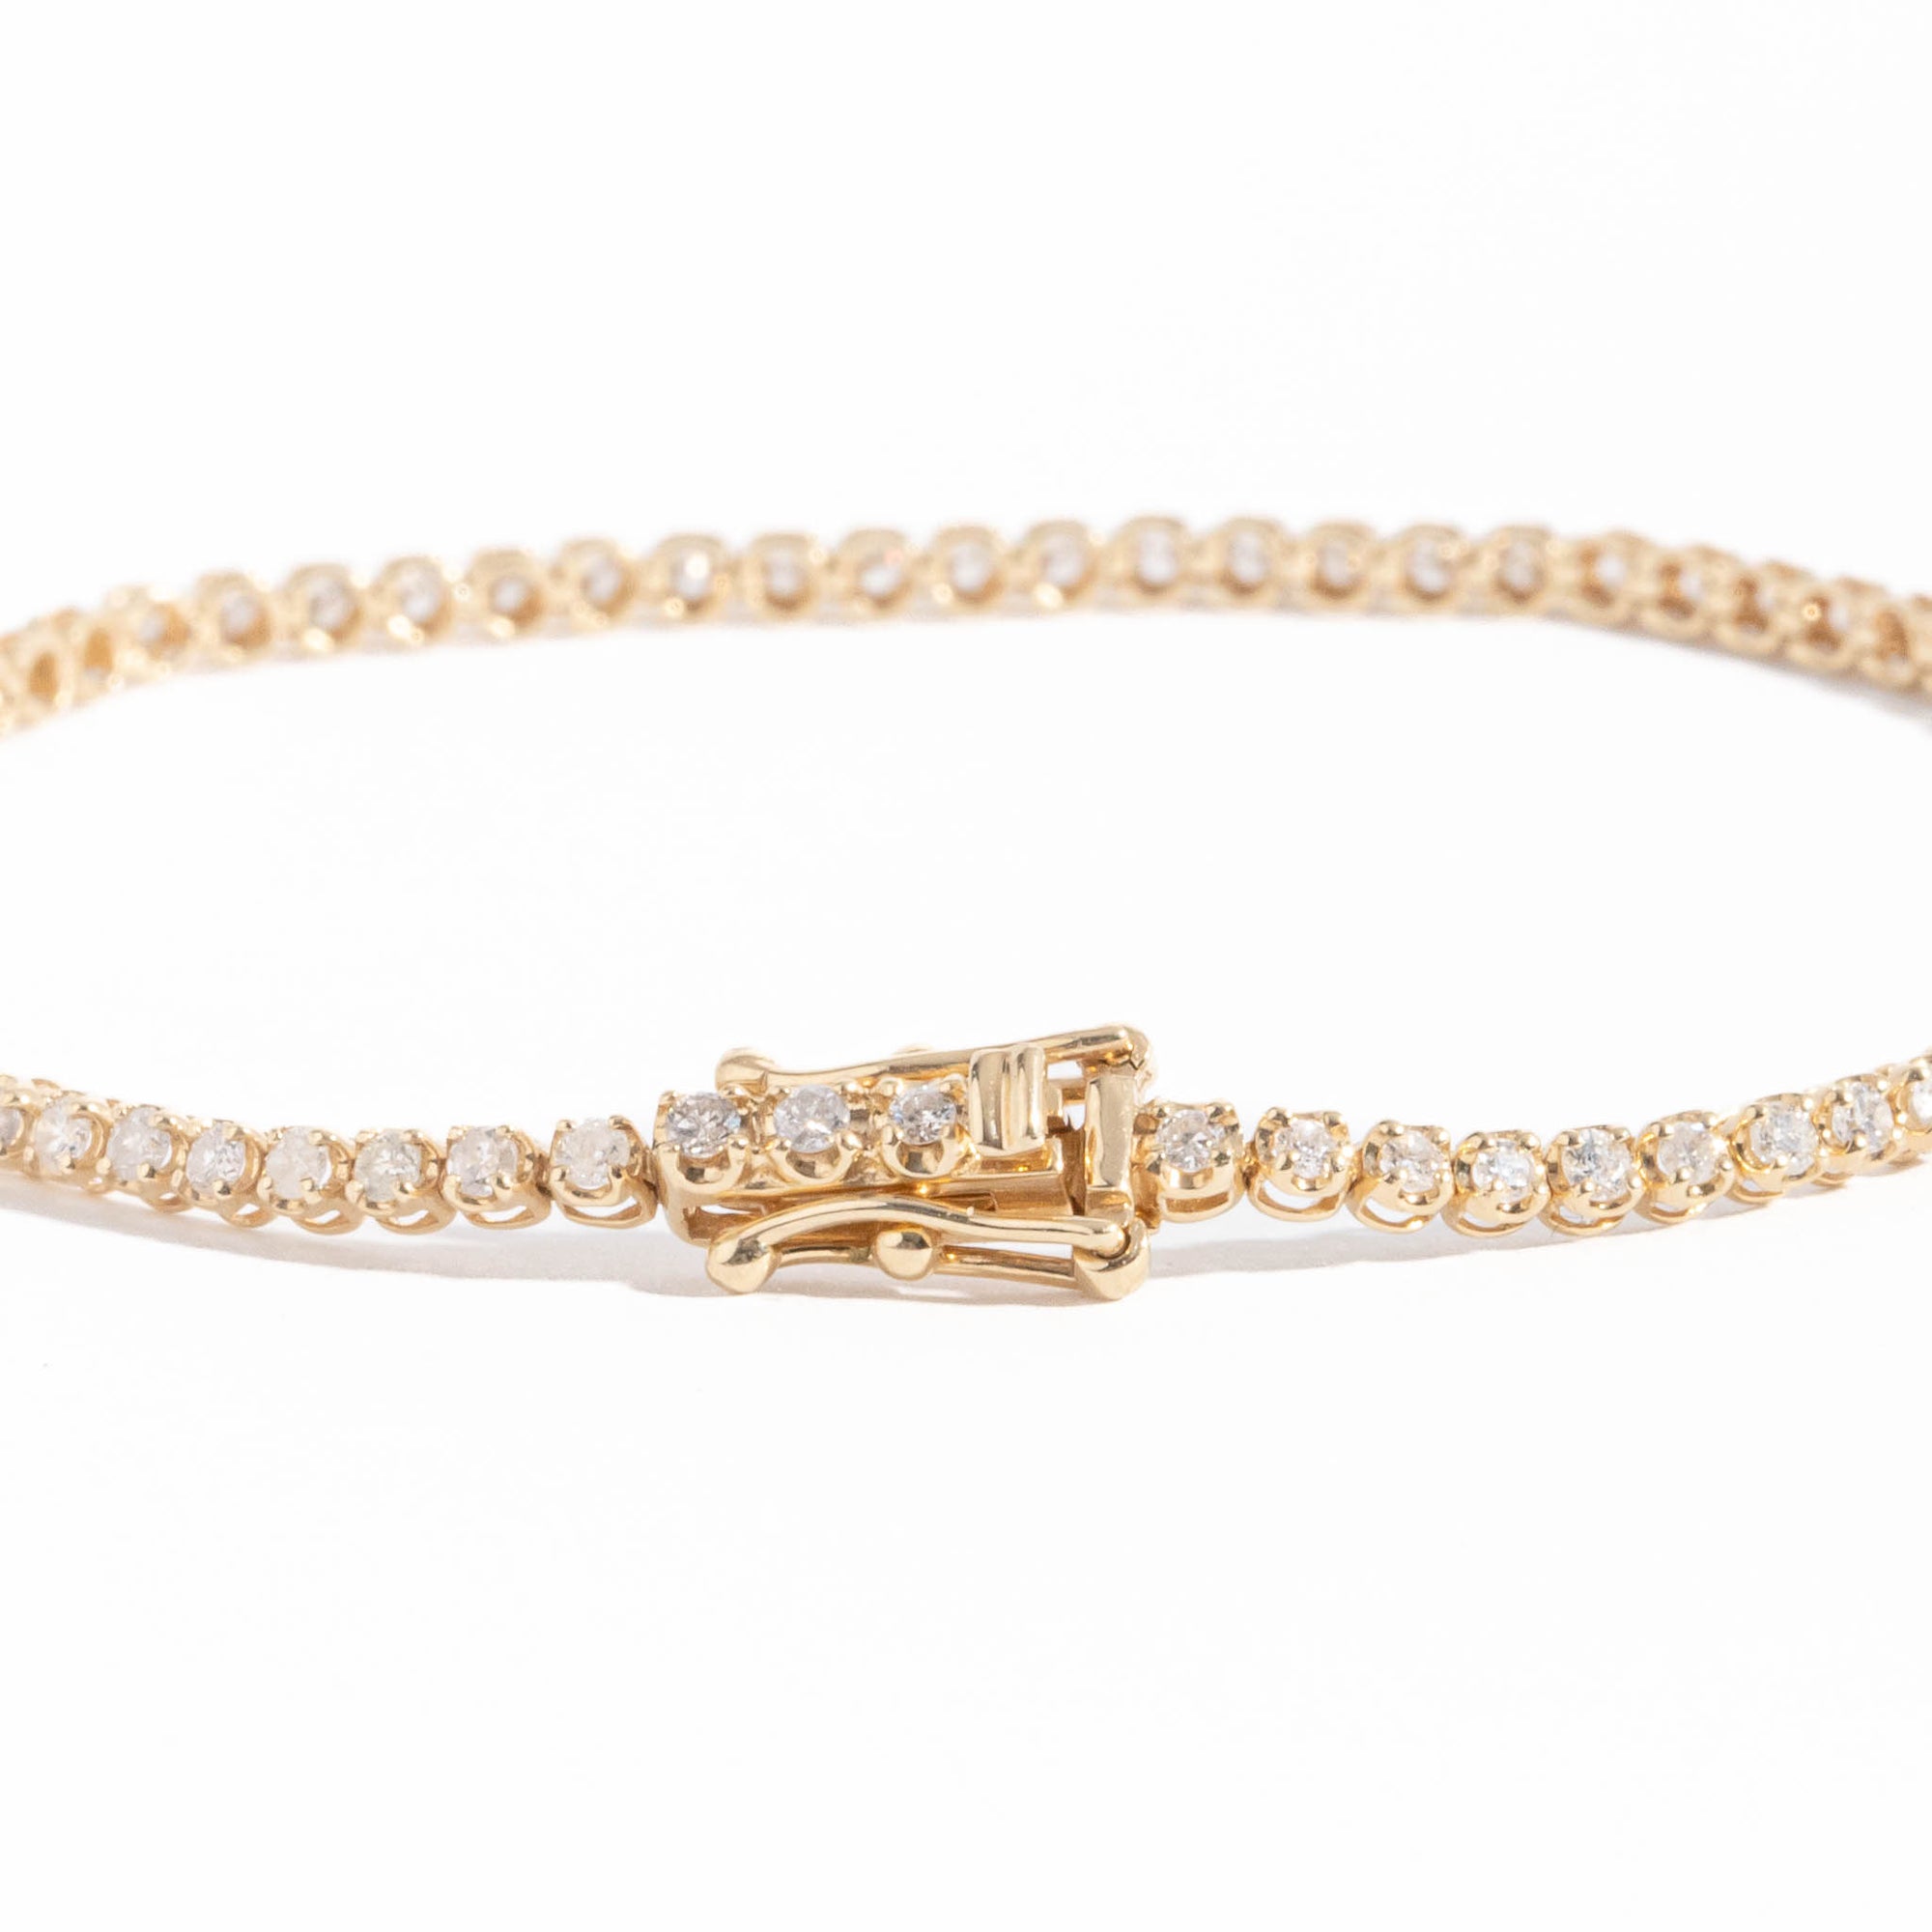 White Diamond Tennis Bracelet in 14 carat yellow gold